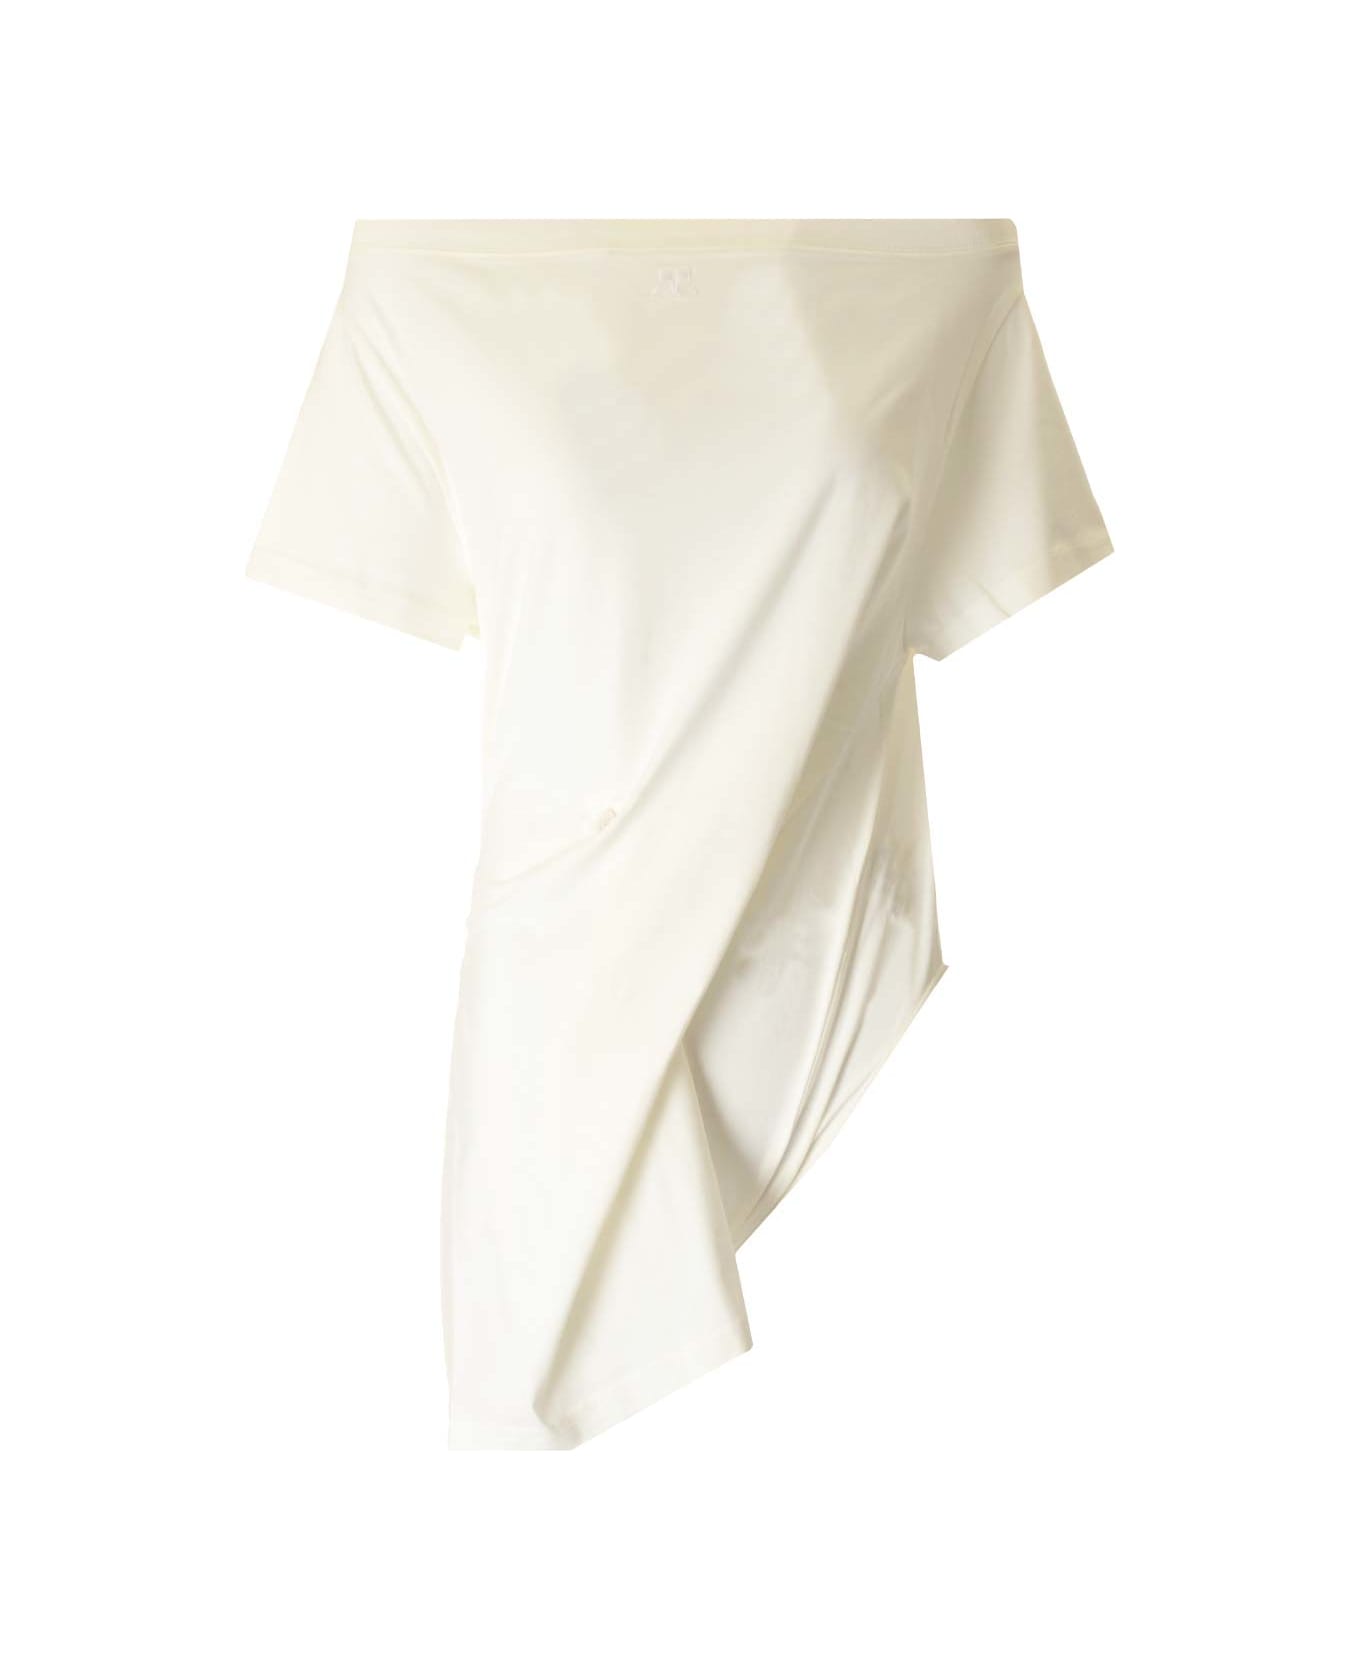 Courrèges Cotton Jersey Mini Dress - HERITAGE WHITE